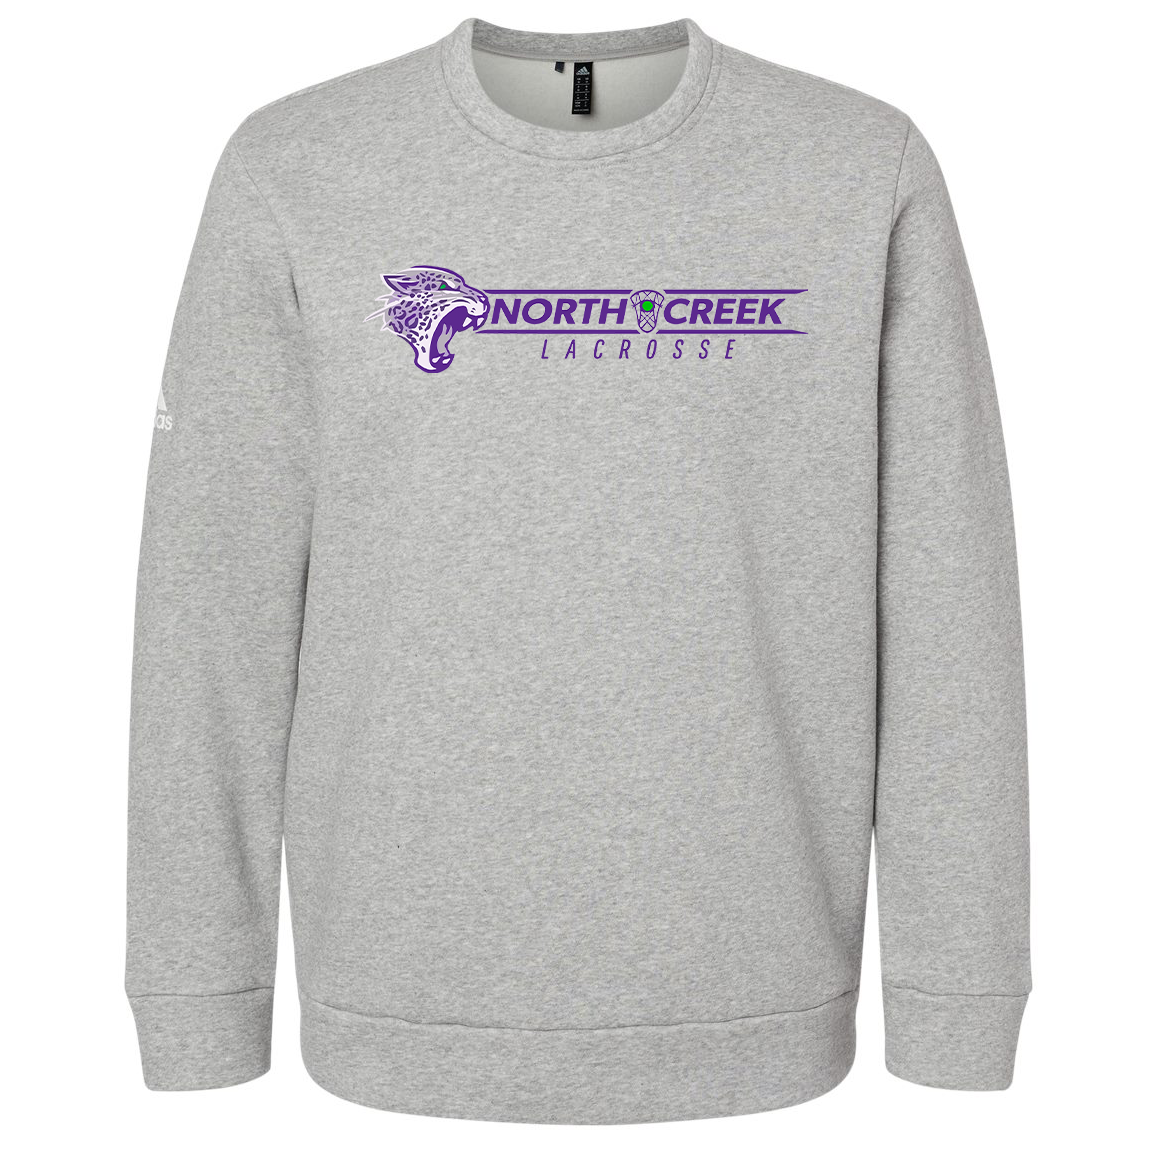 North Creek Lacrosse Adidas Fleece Crewneck Sweatshirt